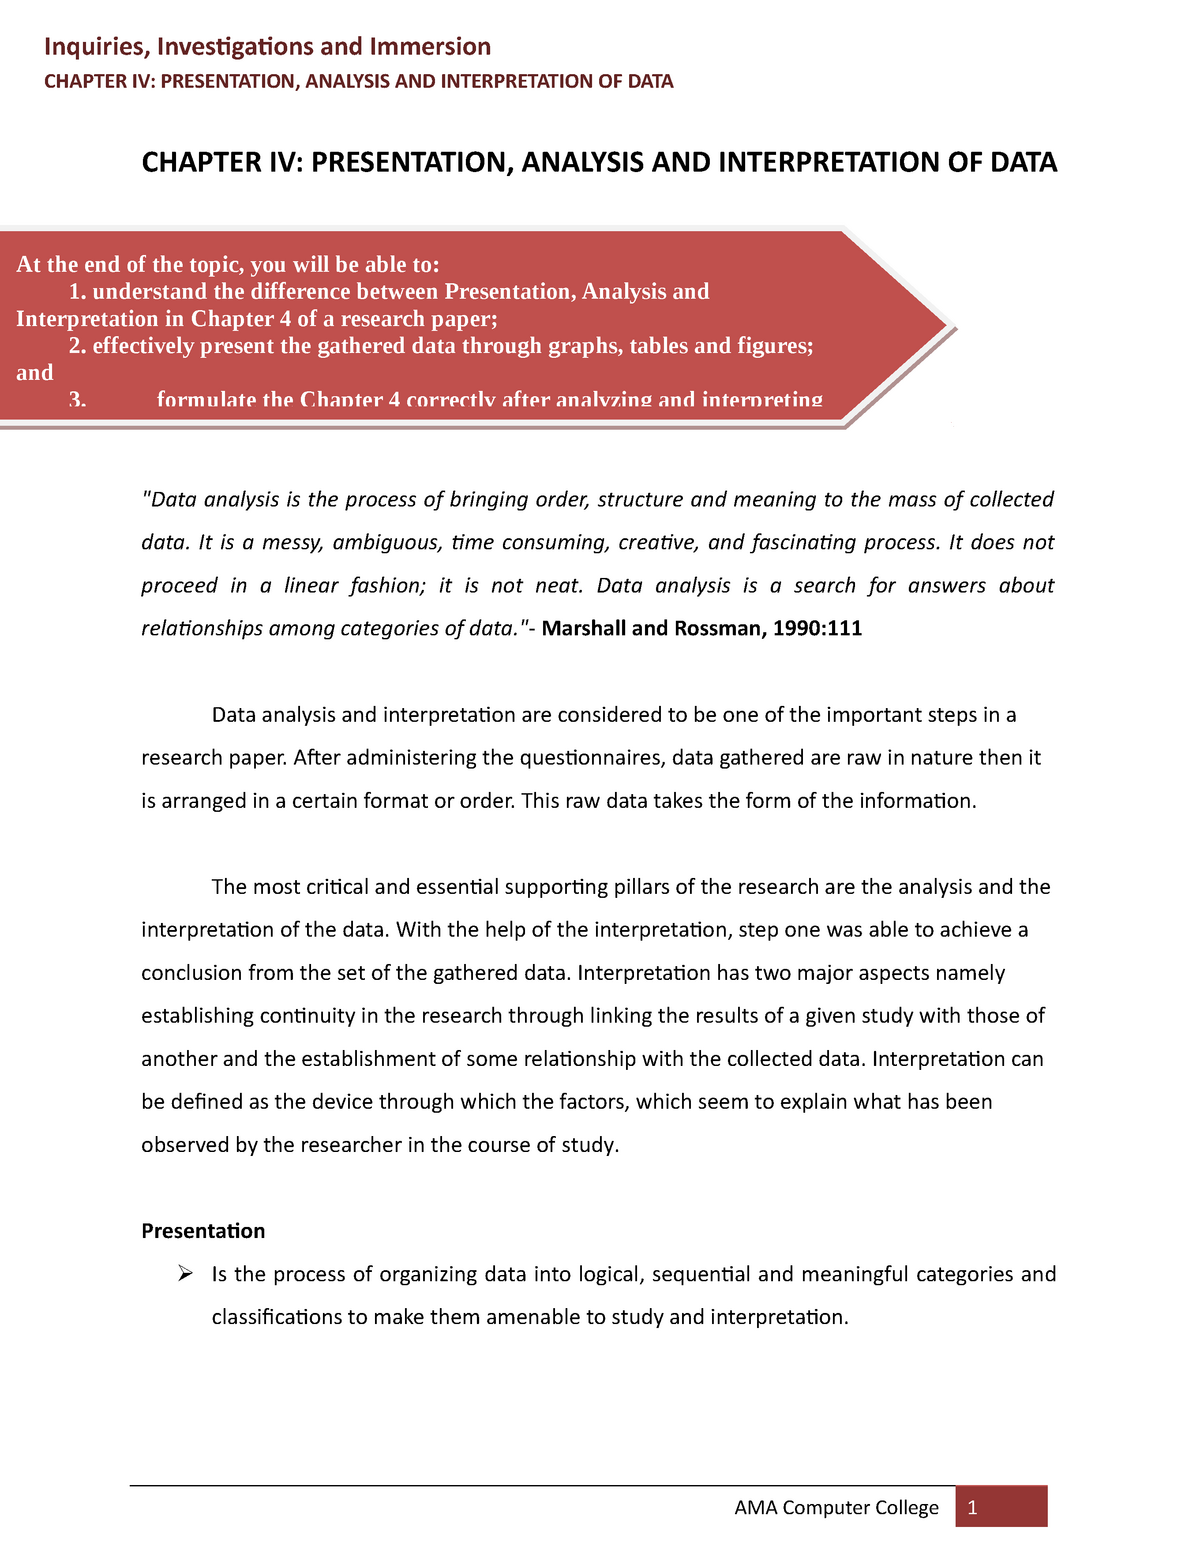 chapter 4 presentation analysis and interpretation of data qualitative research